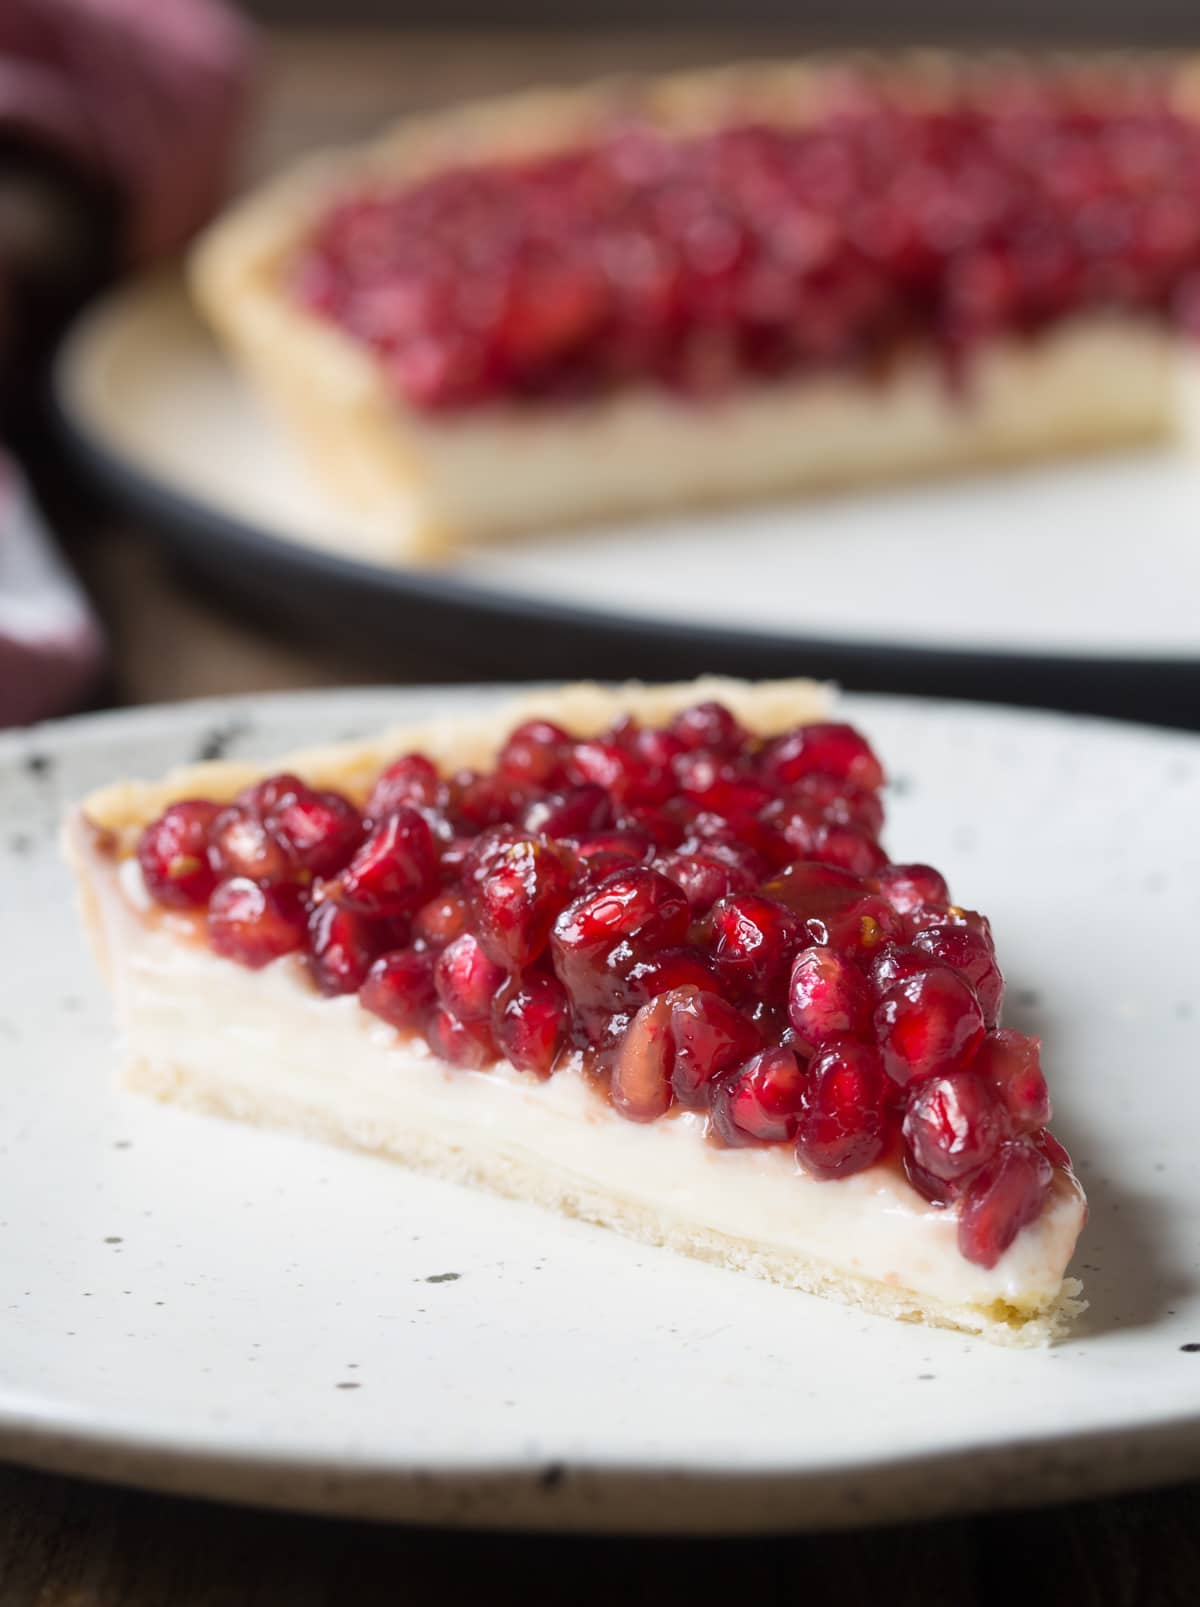 Simple Pomegranate Cream Tart Recipe #ASpicyPerspective #holiday #pomegranaterecipe